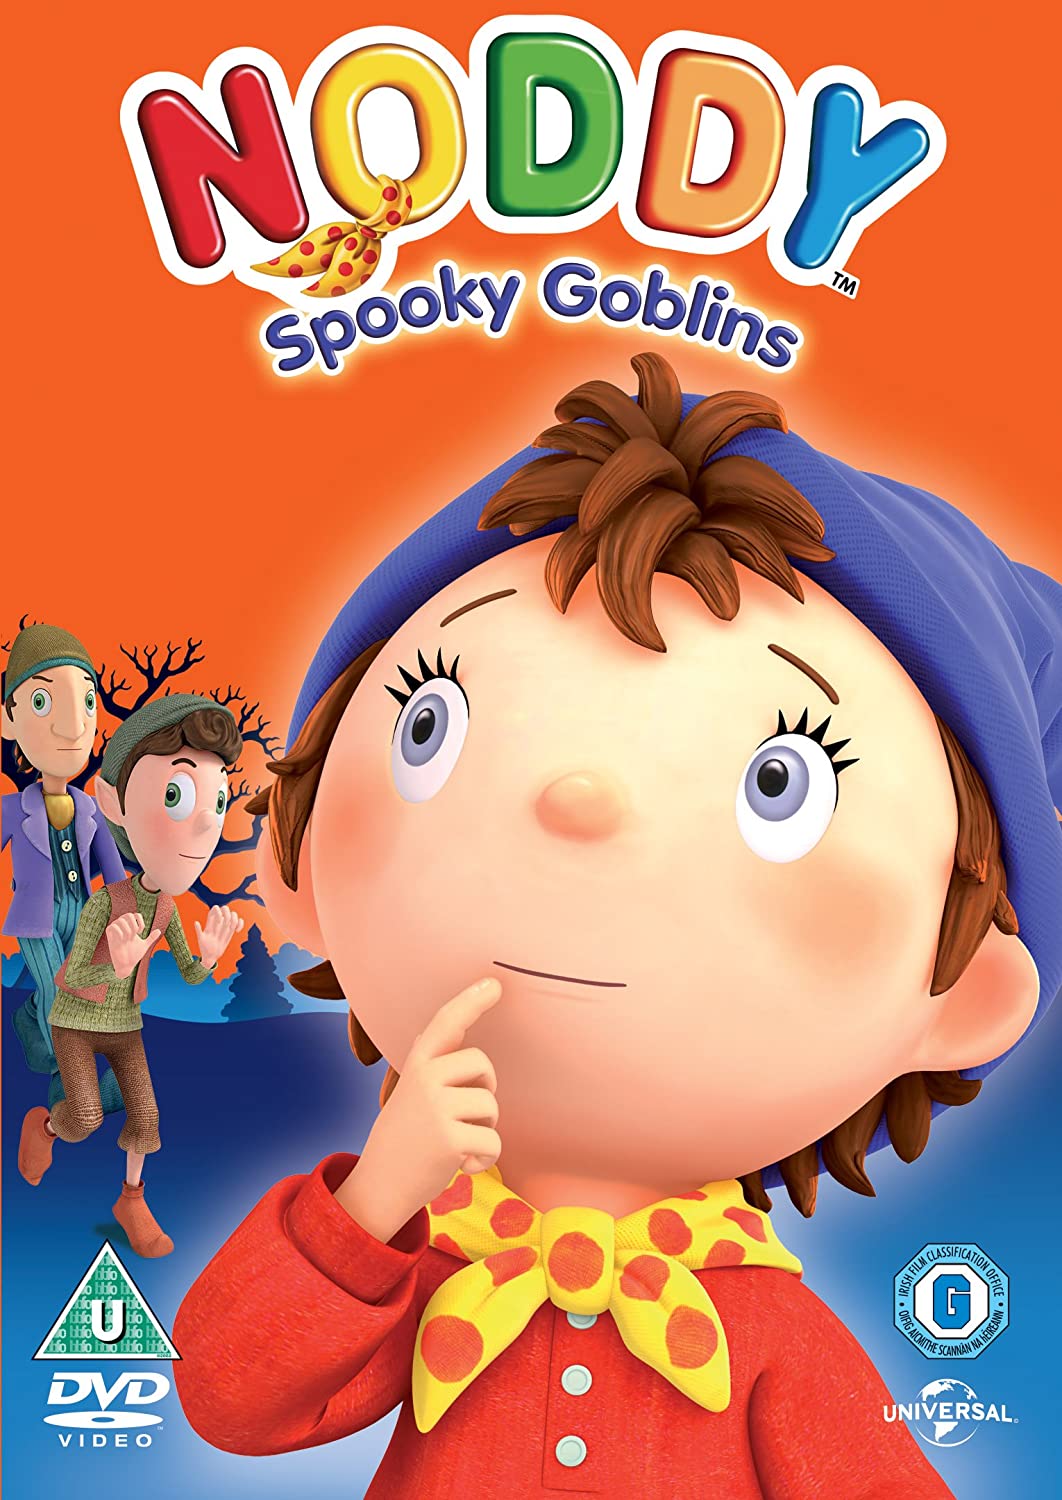 Noddy: Spooky Goblins (DVD)